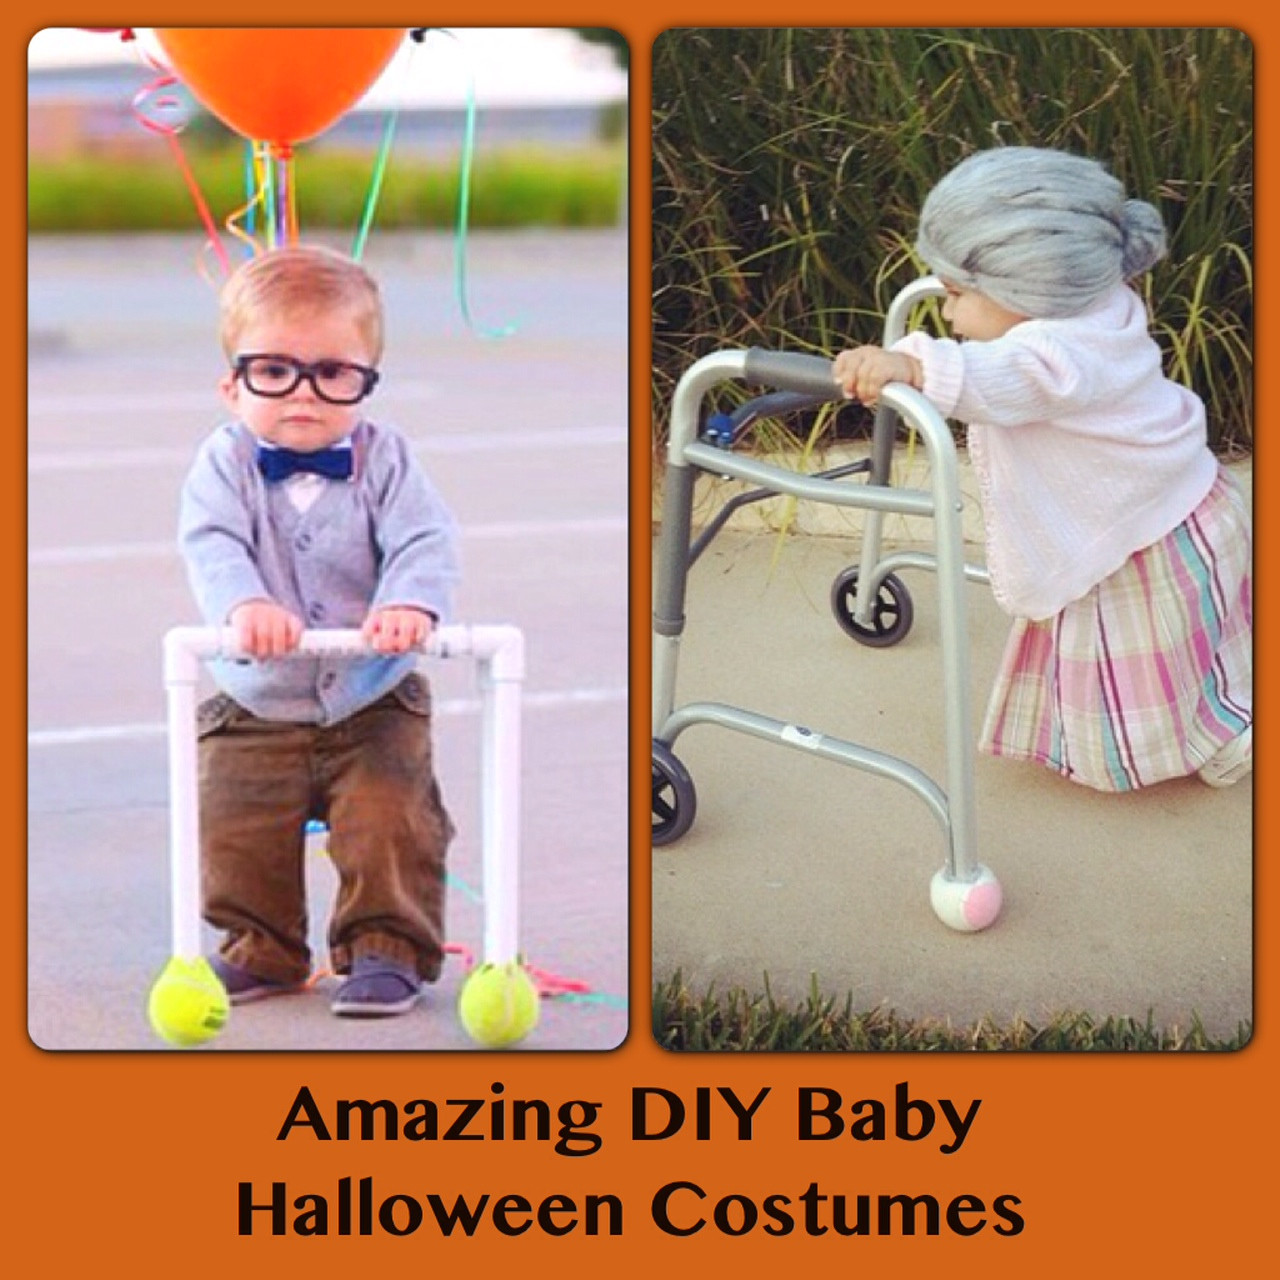 Creative Baby Halloween Costume Ideas
 Amazingly Creative and Easy Baby Halloween Costumes How